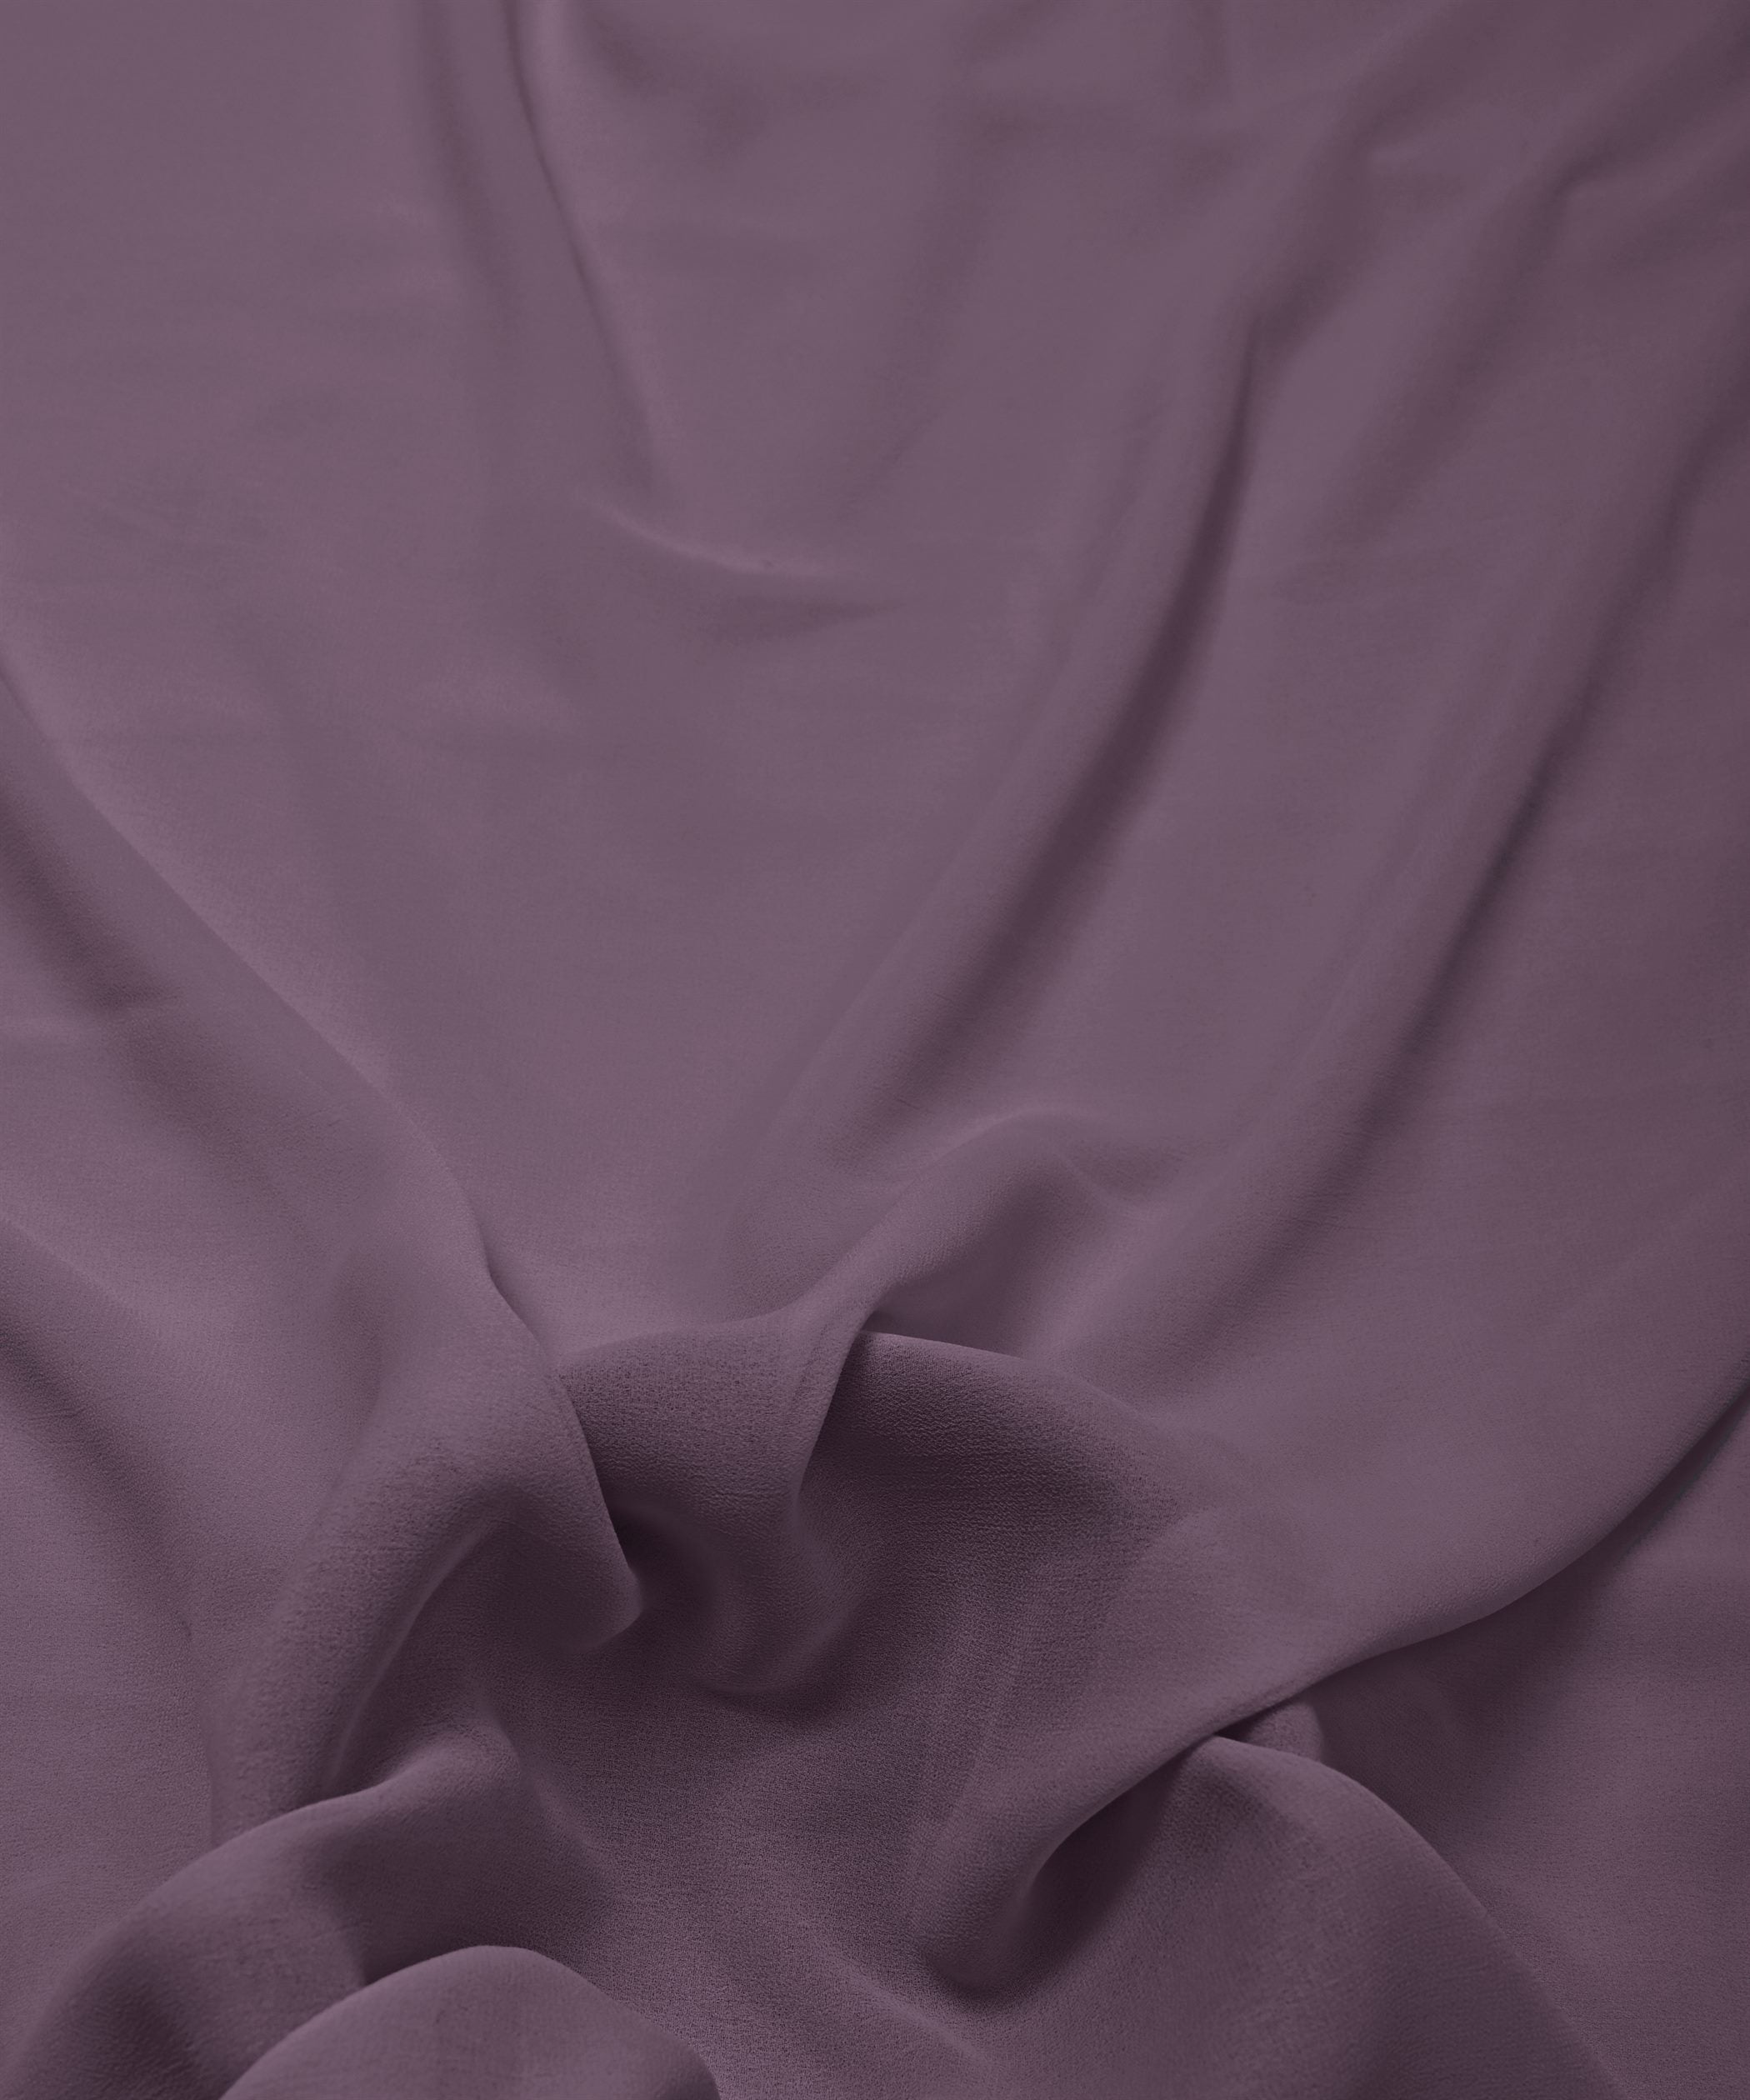 Dim Grey Plain Dyed Georgette (60 Grams) Fabric